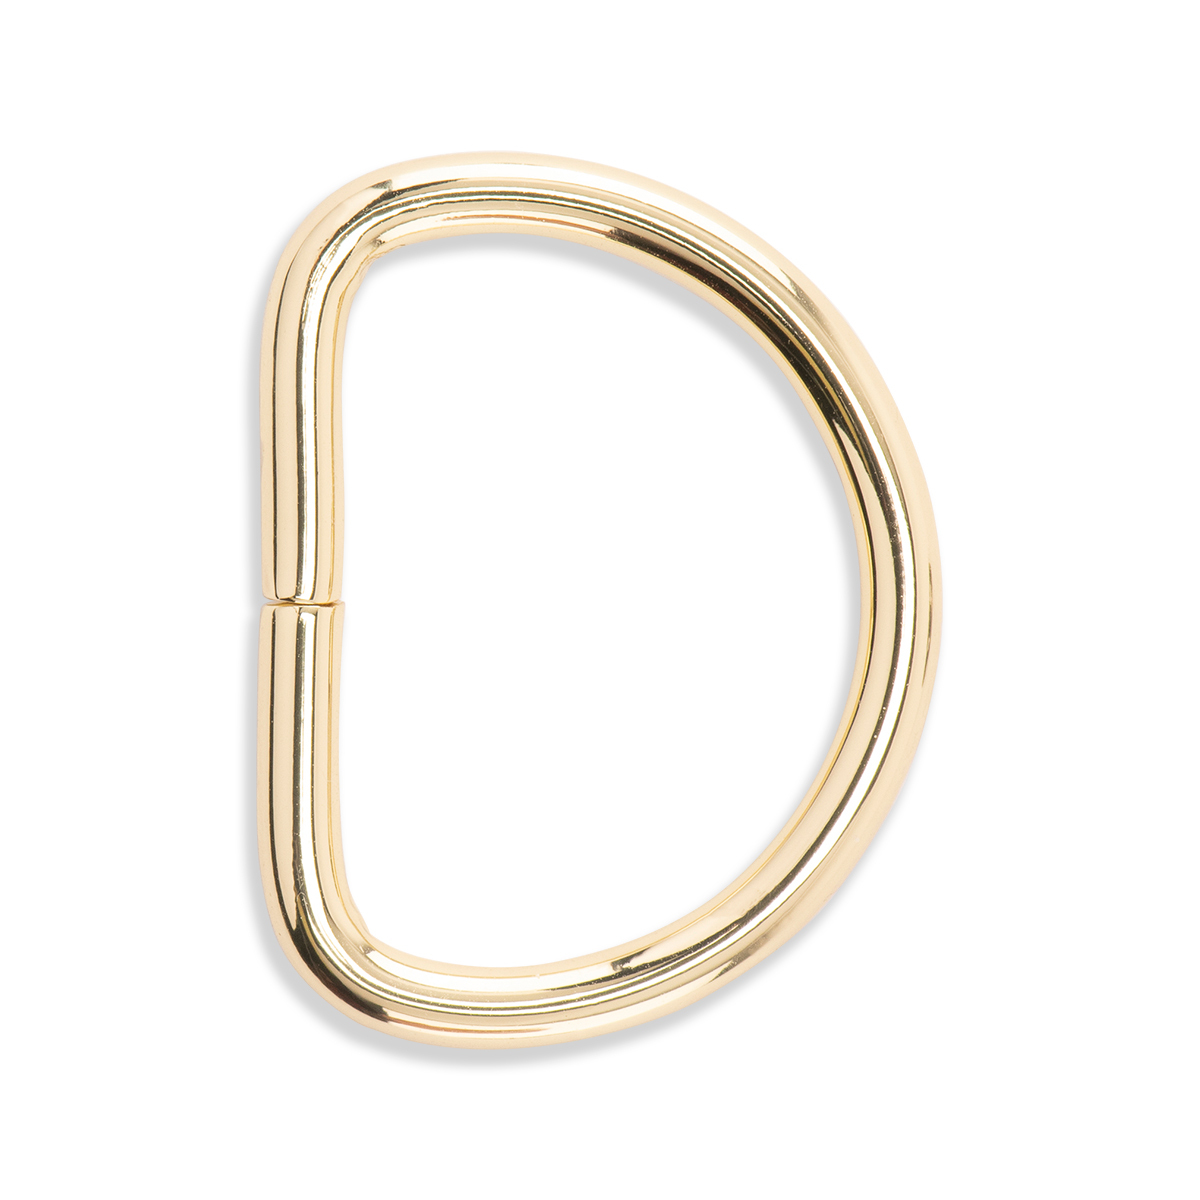 Rectangle Rings Bag Hardware - 1/2 - 10/Pack - Gold